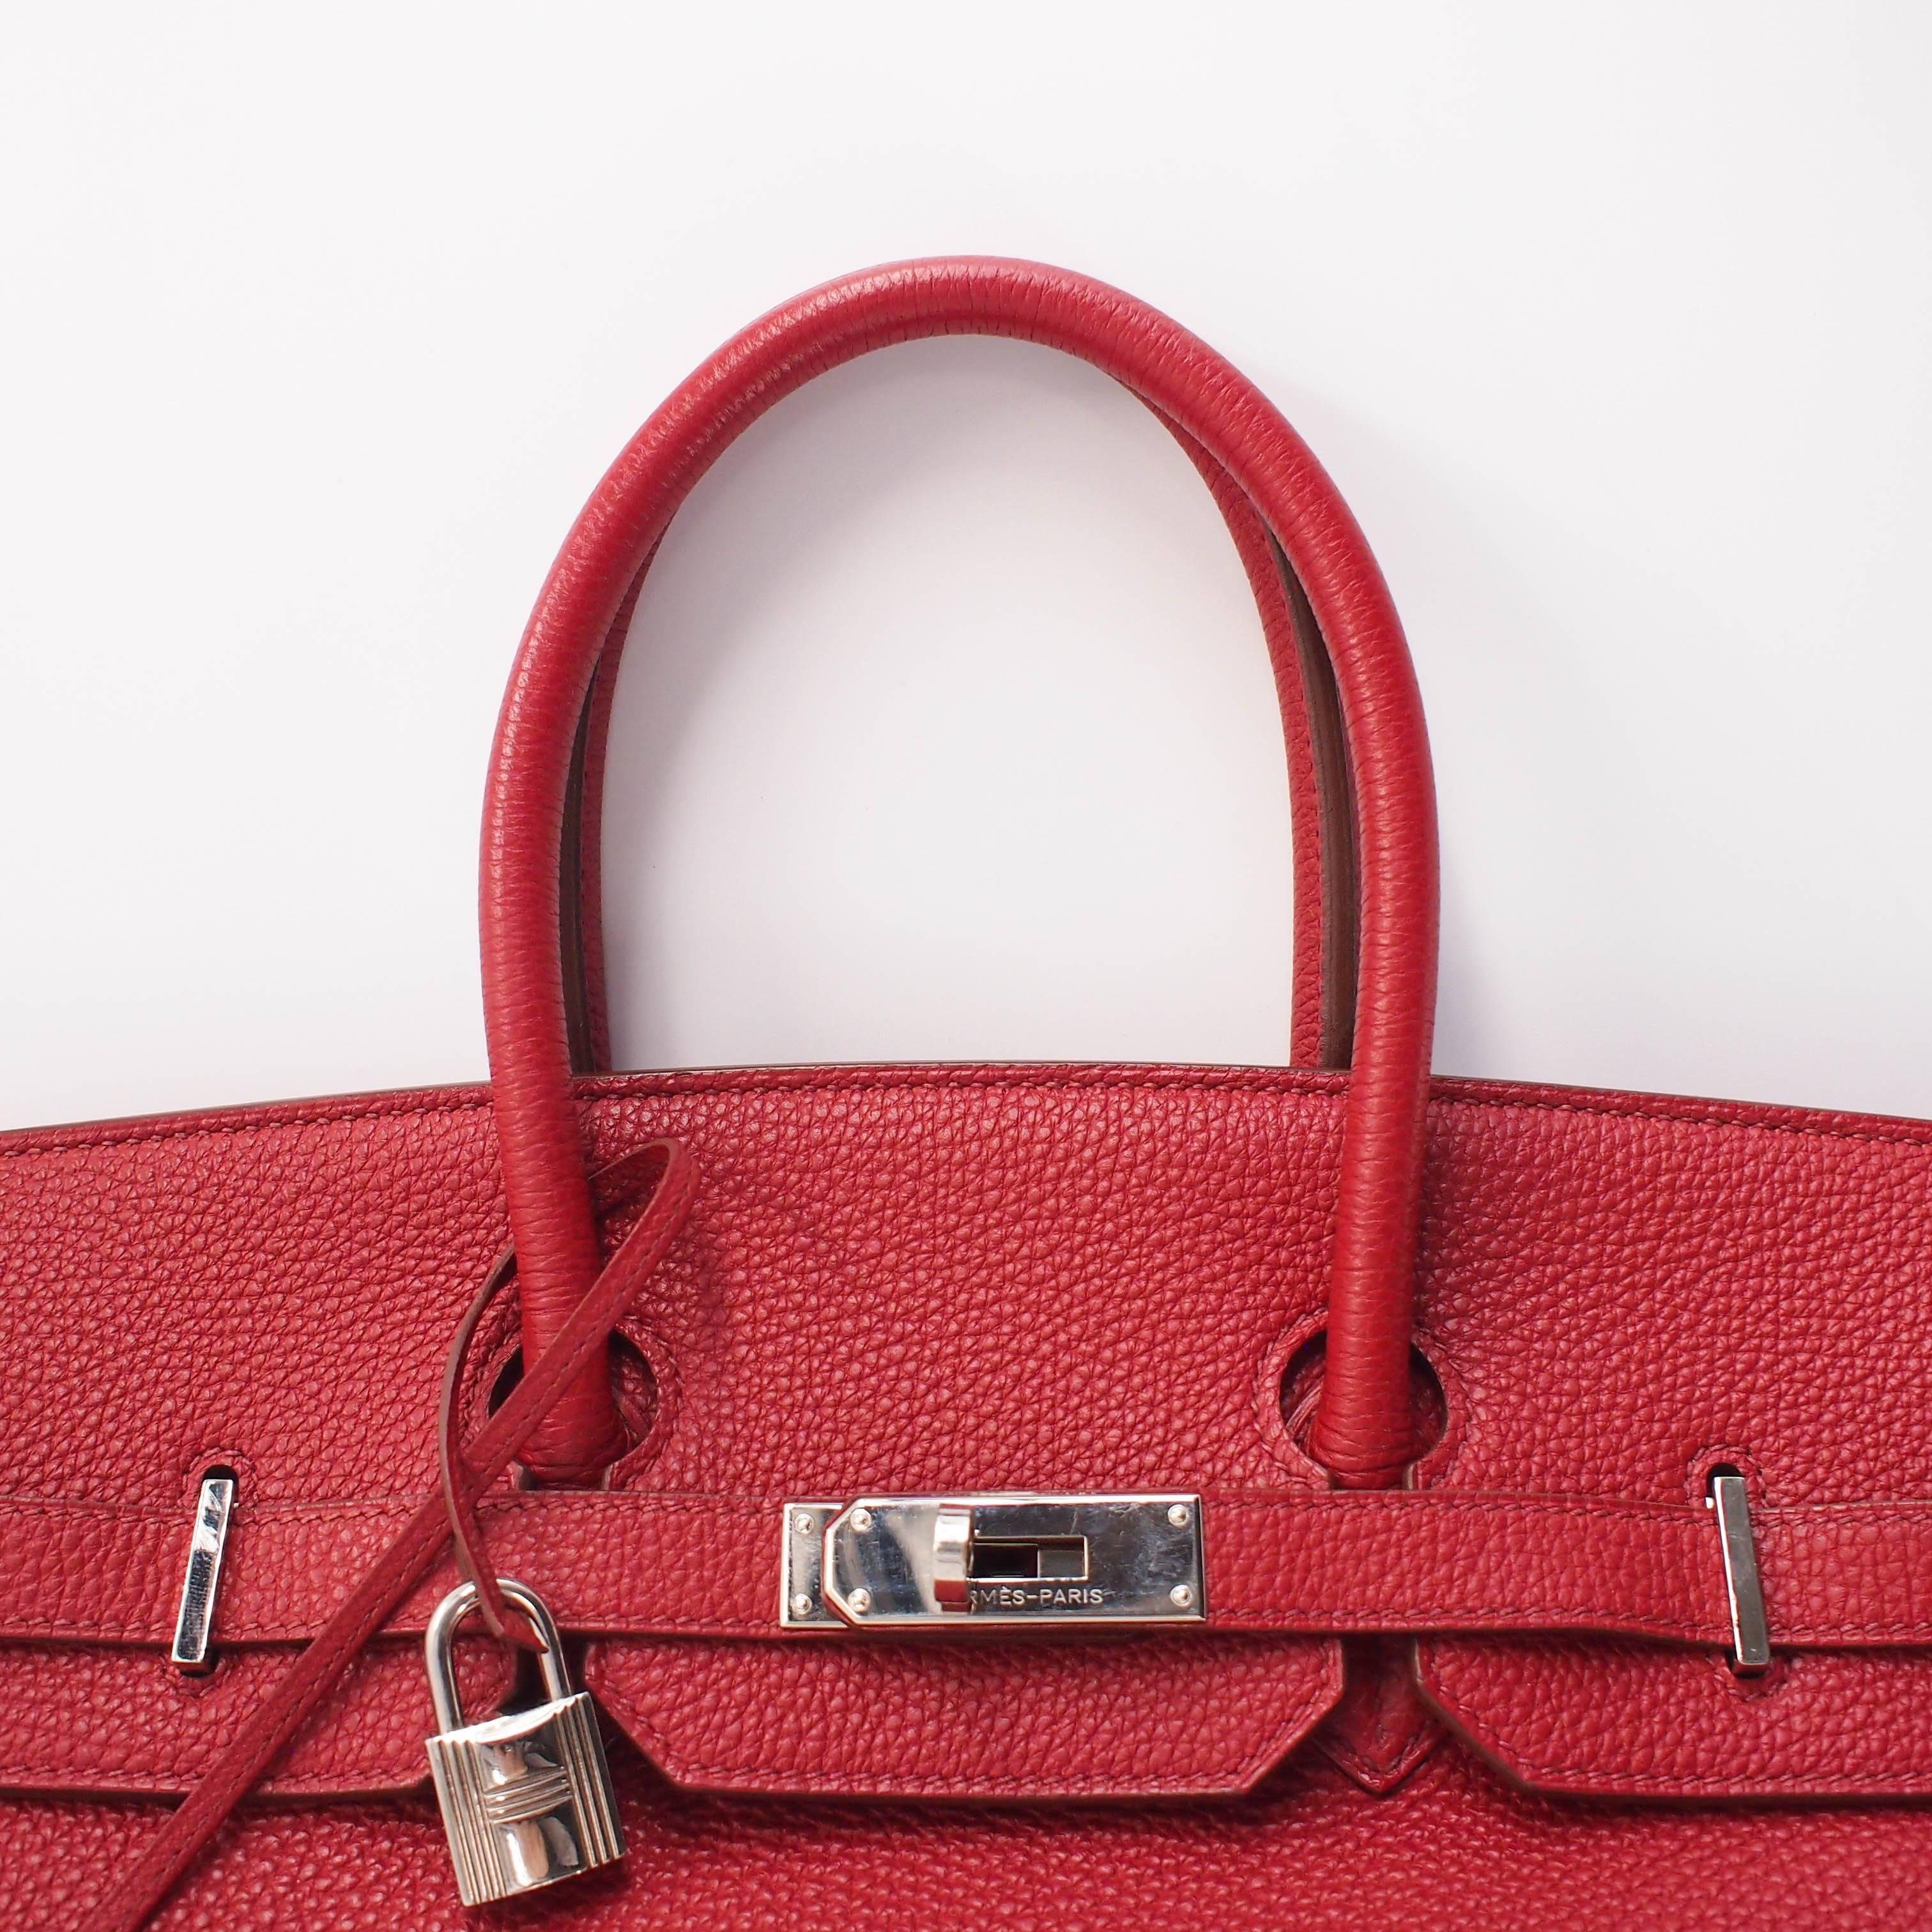 Hermes Birkin Handbag size 35 in Rouge Grenade With Palladium Hardware (PHW) 3